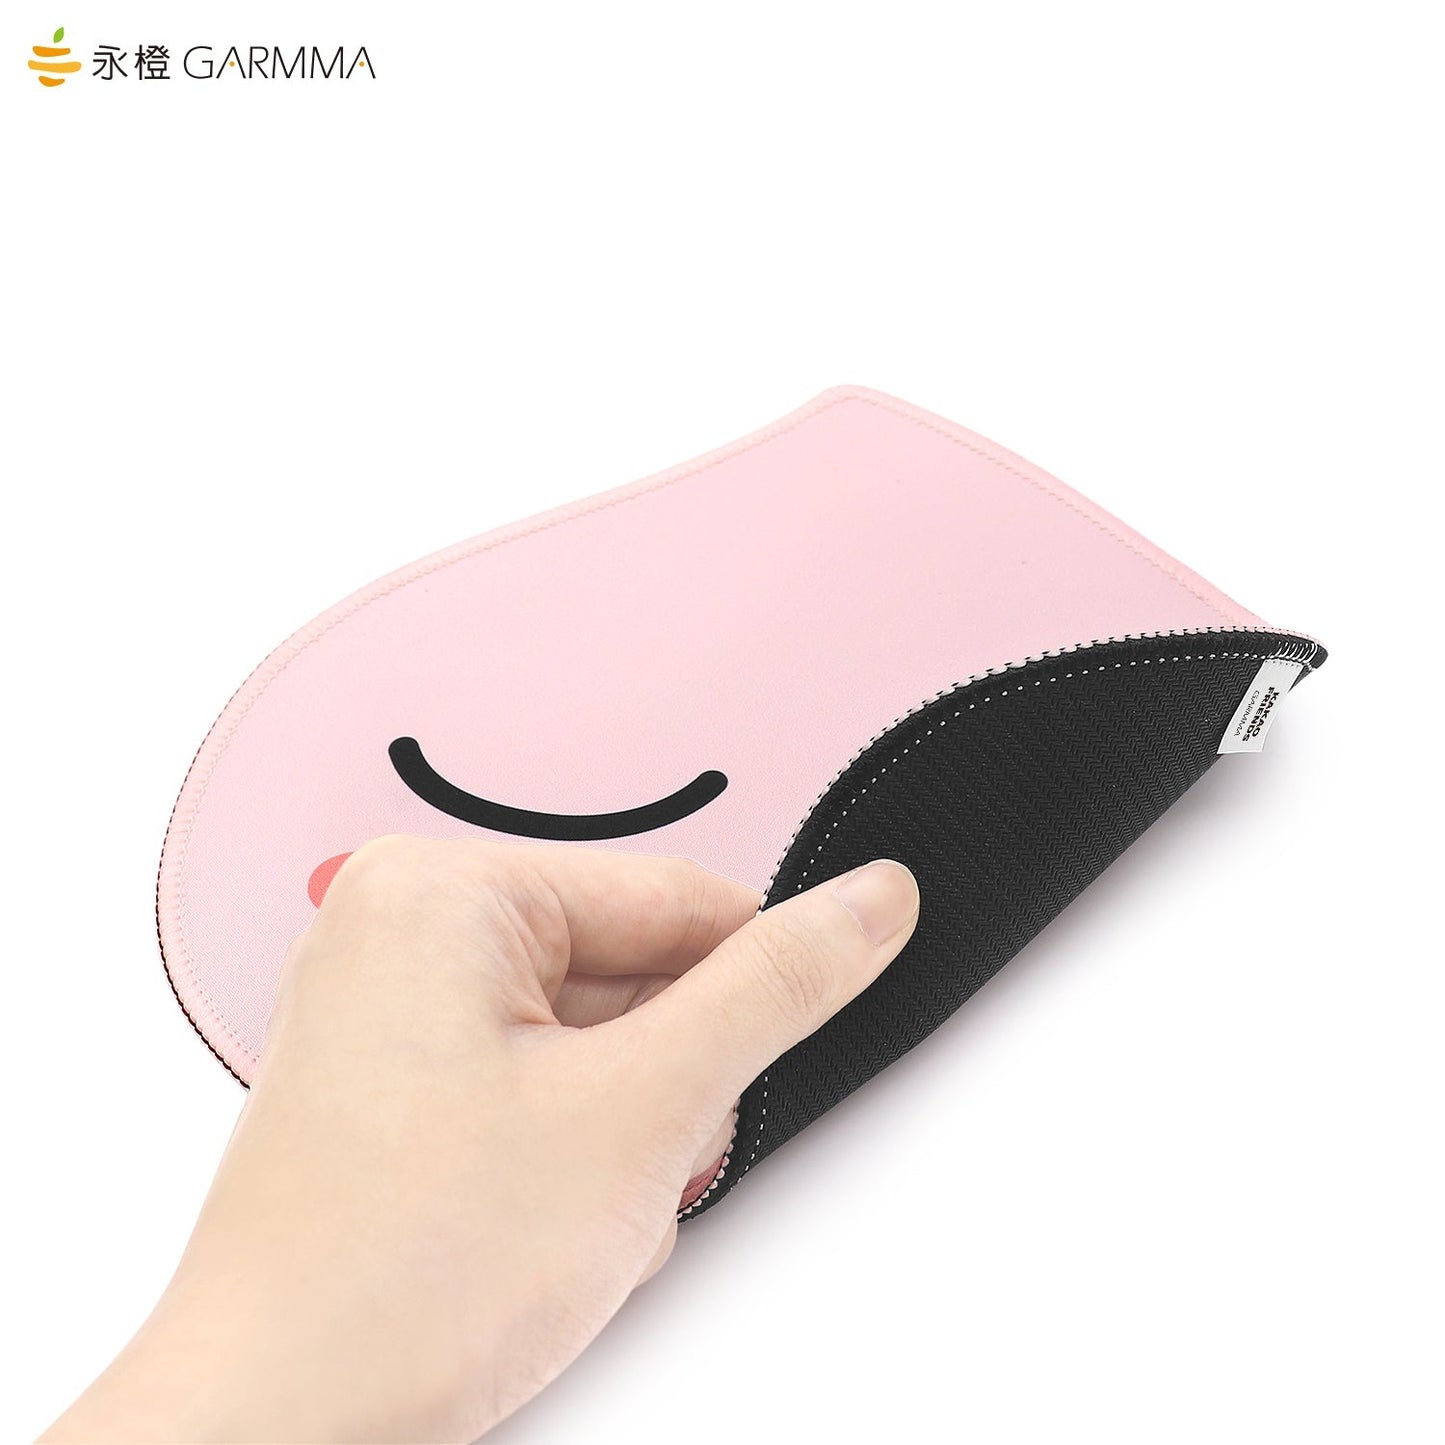 GARMMA Kakao Friends Non-Slip Mouse Pad